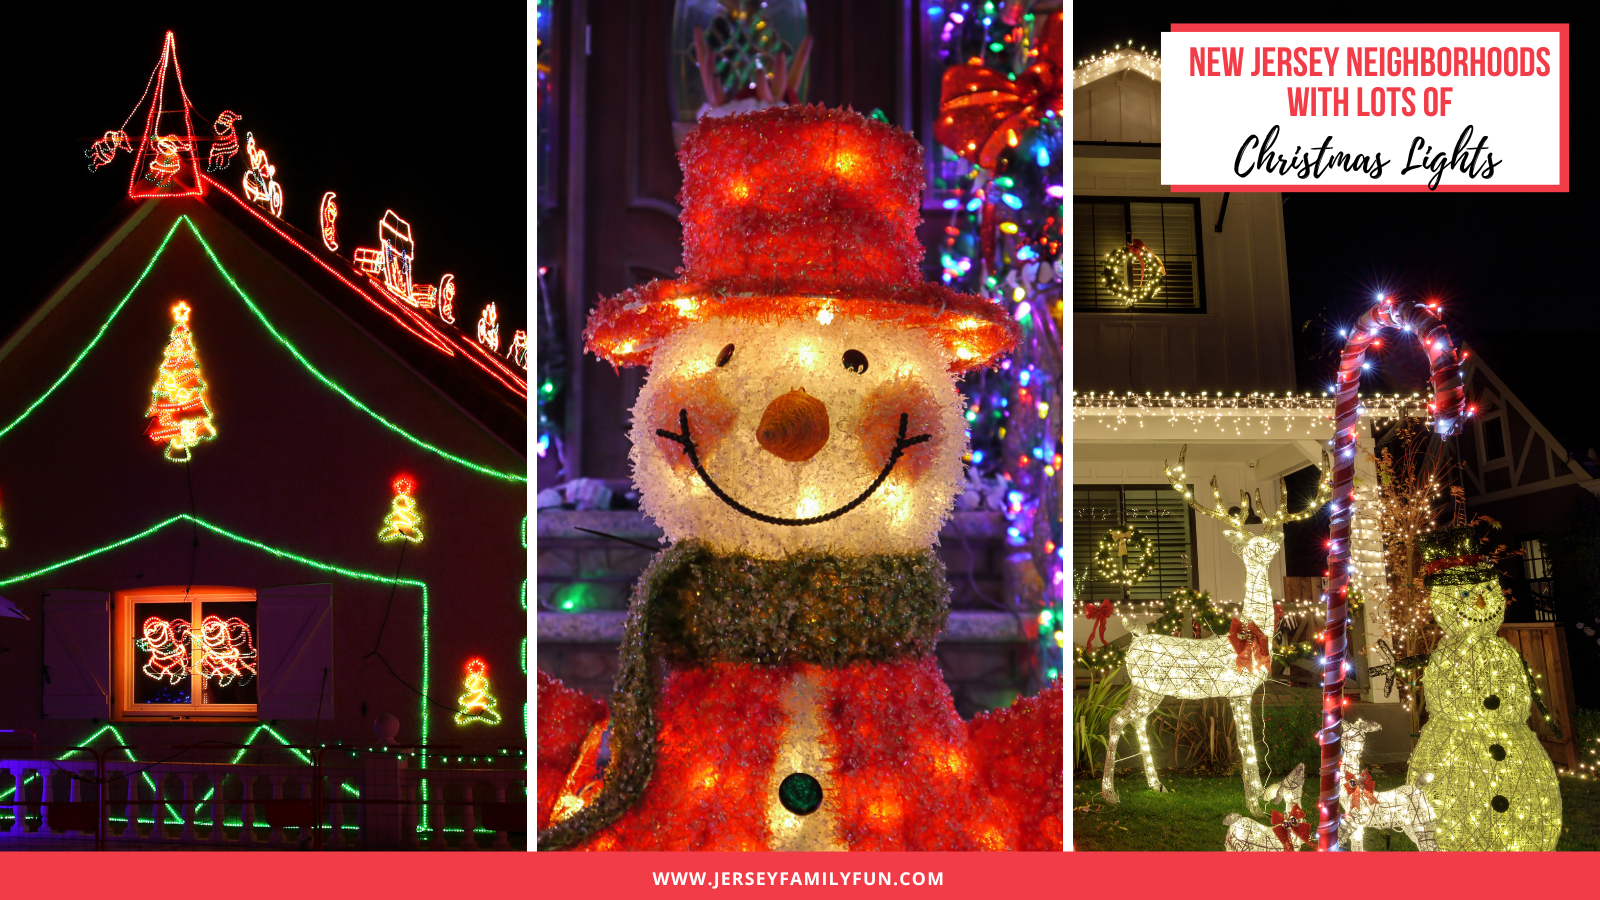 New Jersey Neighborhoods With Lots of Christmas Lights